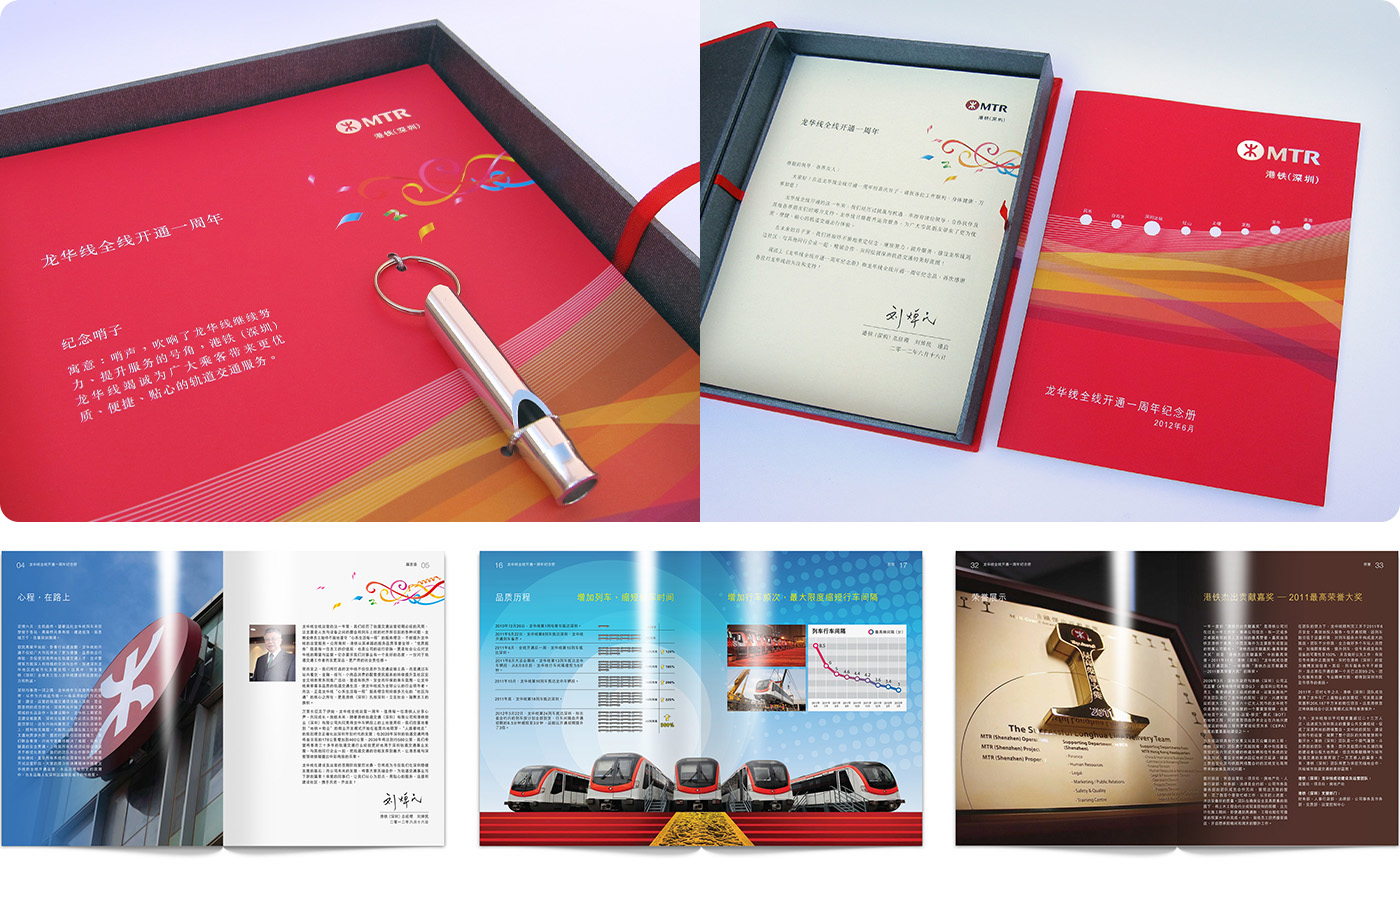 MTR Corporation (Shenzhen) Limited-Longhua line anniversary booklet design